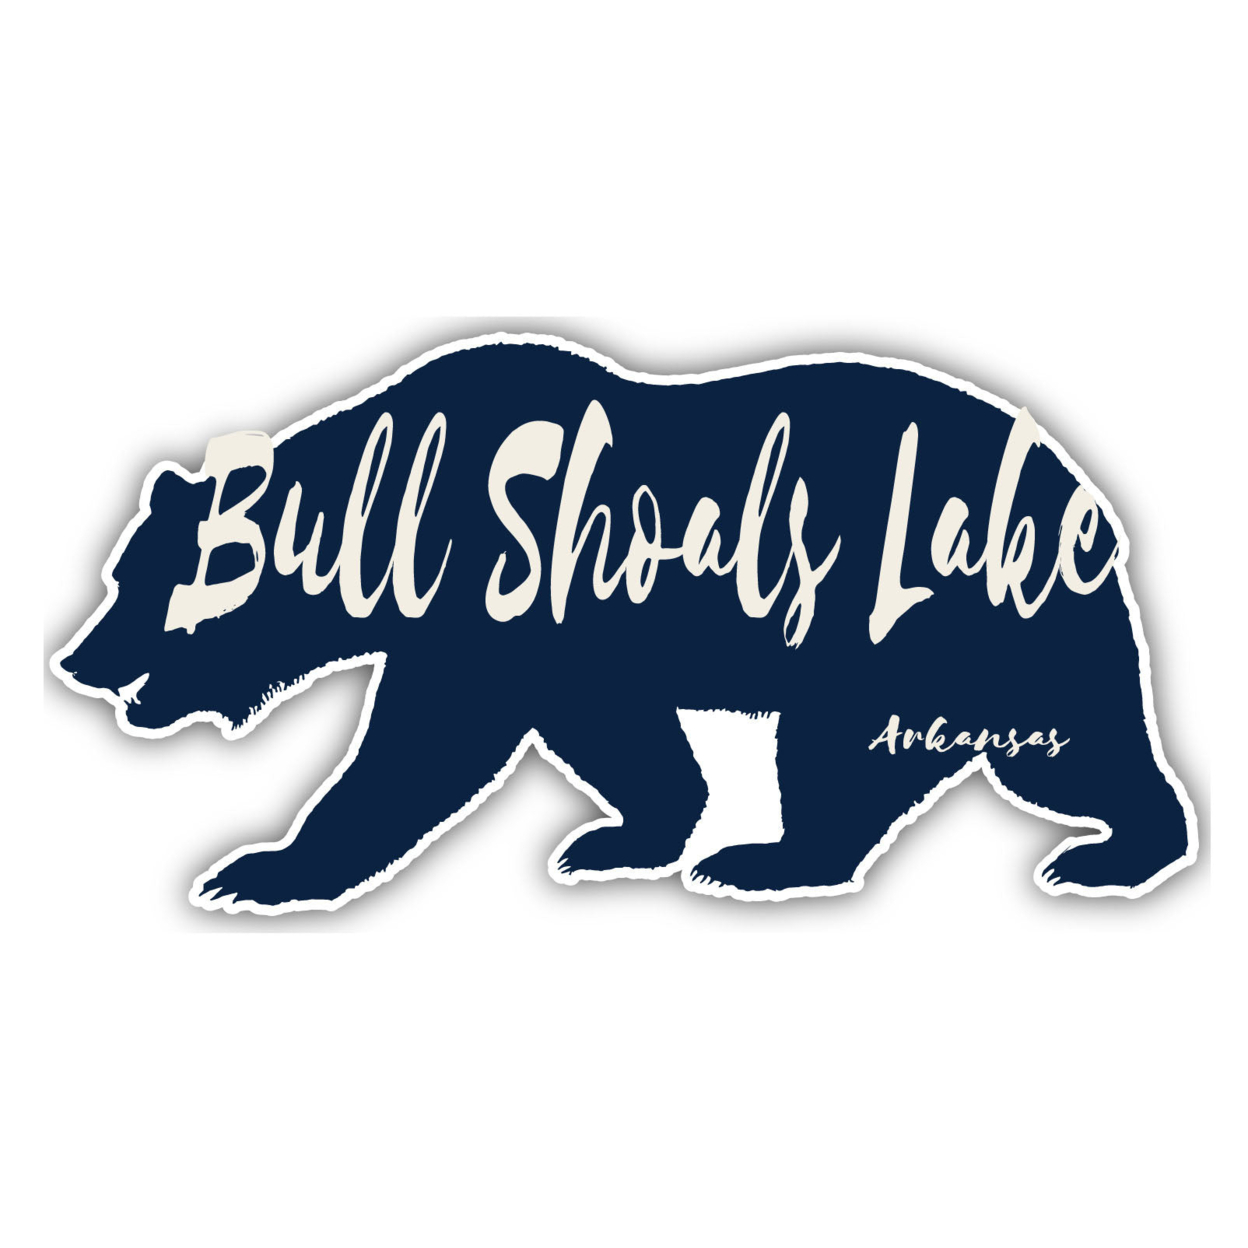 Bull Shoals Lake Arkansas Souvenir Decorative Stickers (Choose Theme And Size) - Single Unit, 6-Inch, Tent